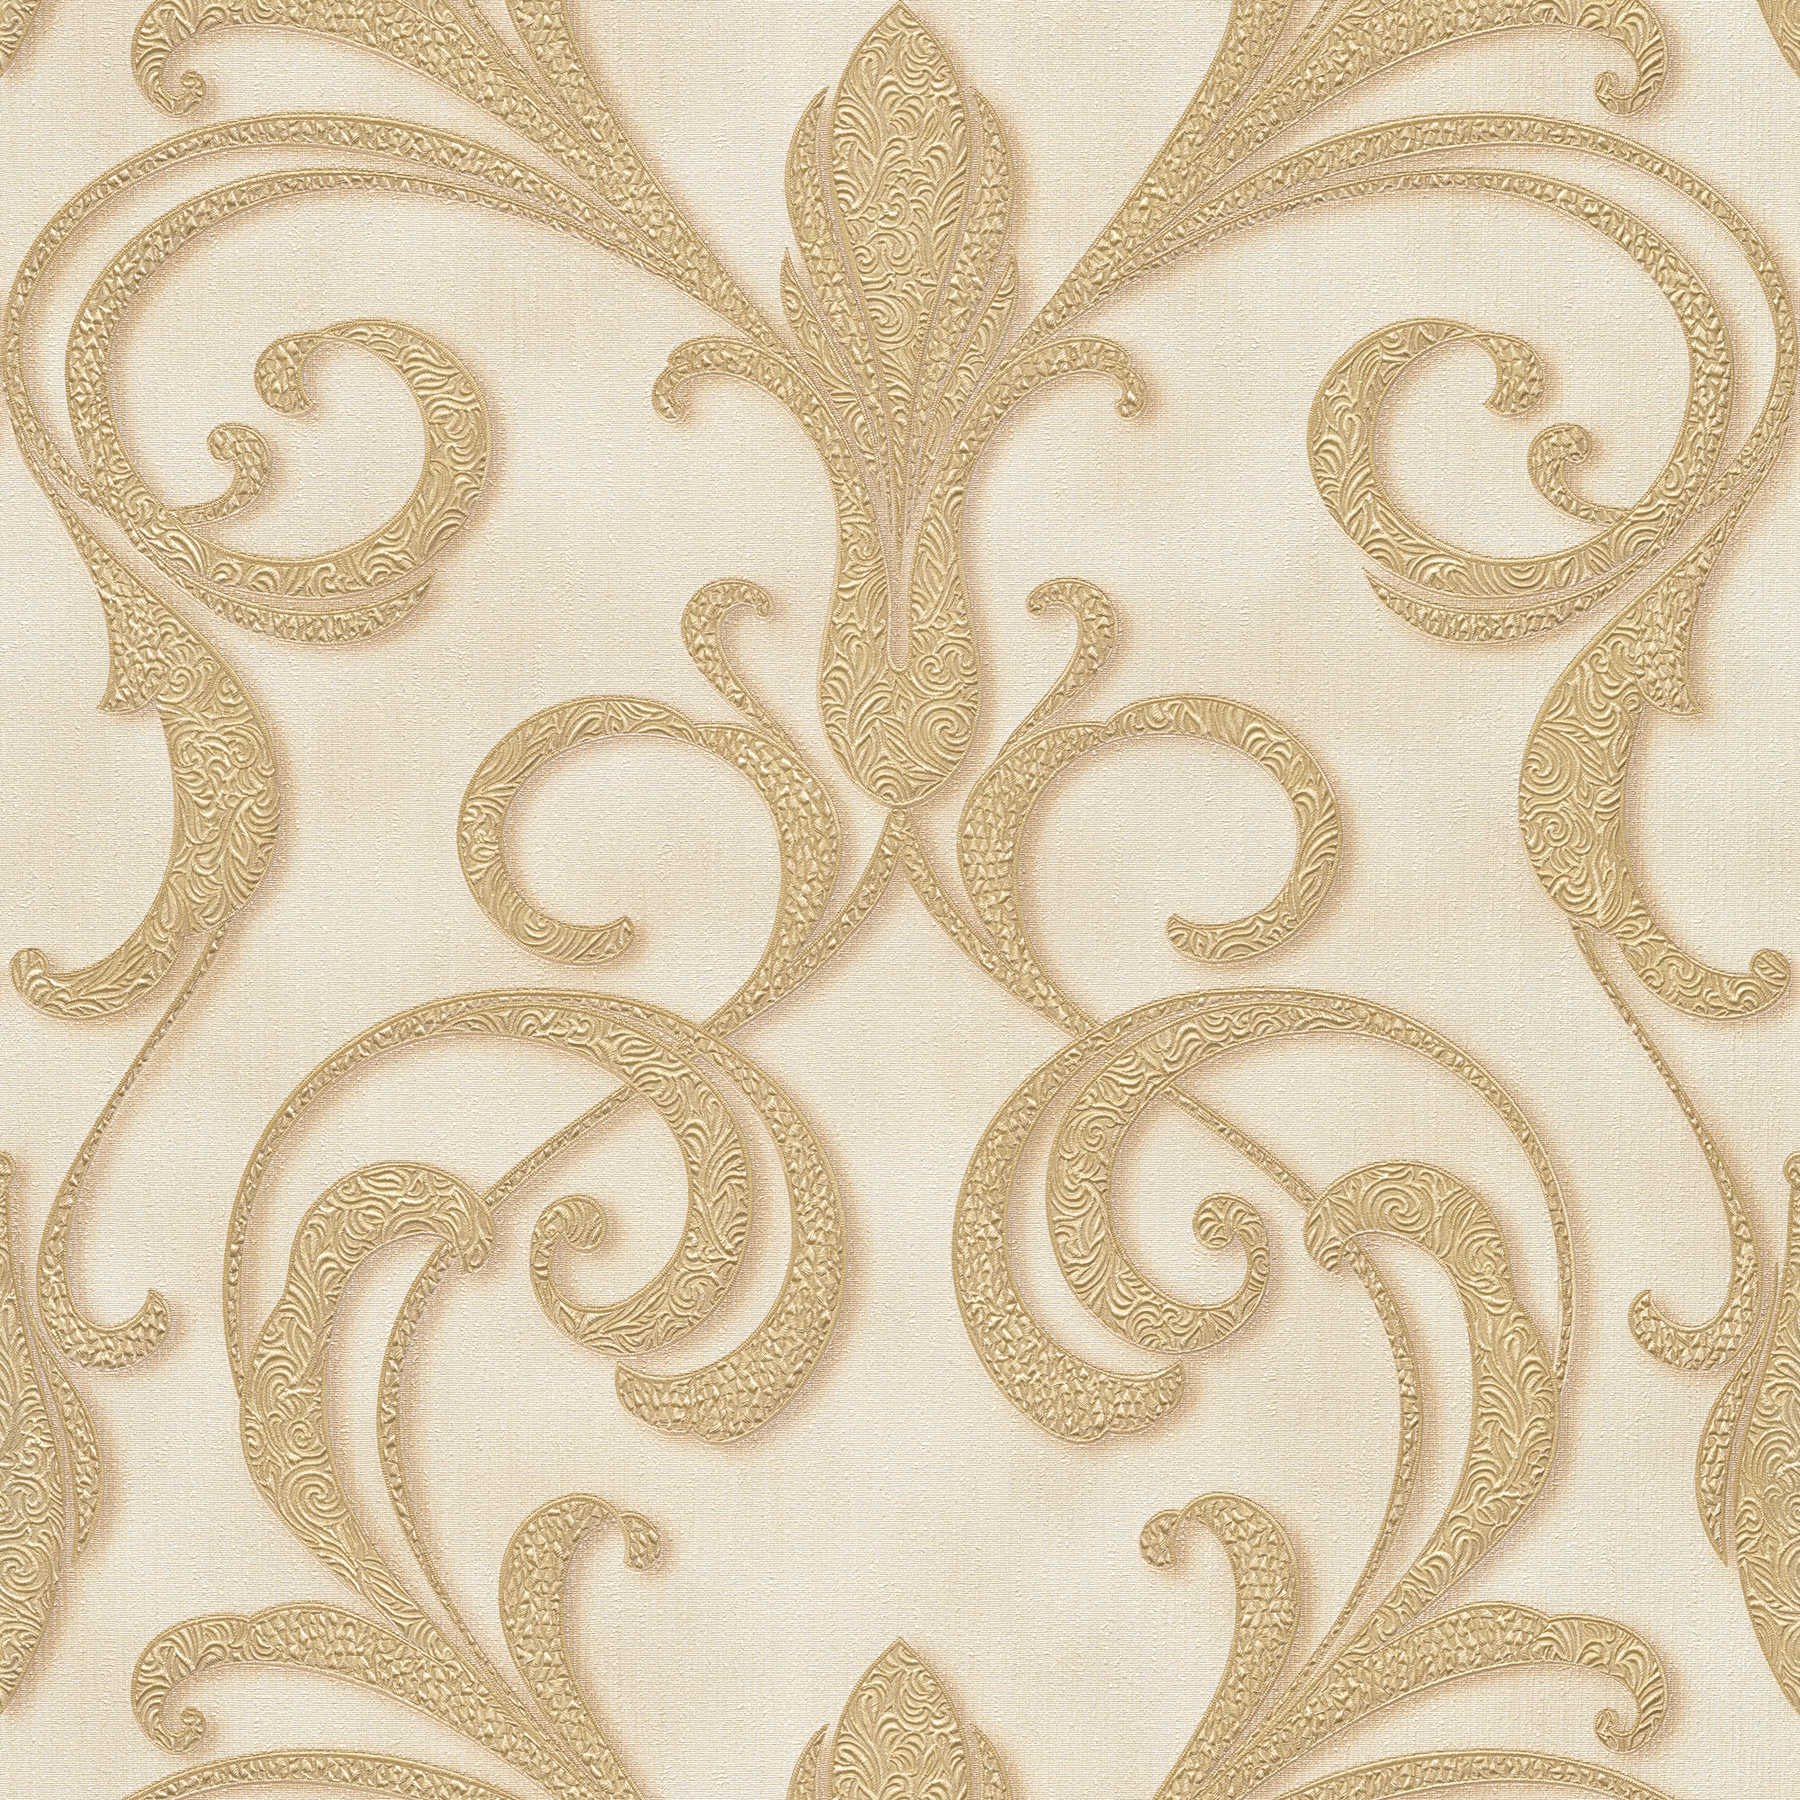 Metallic Tapete mit filigranem Ornamentmuster – Creme
